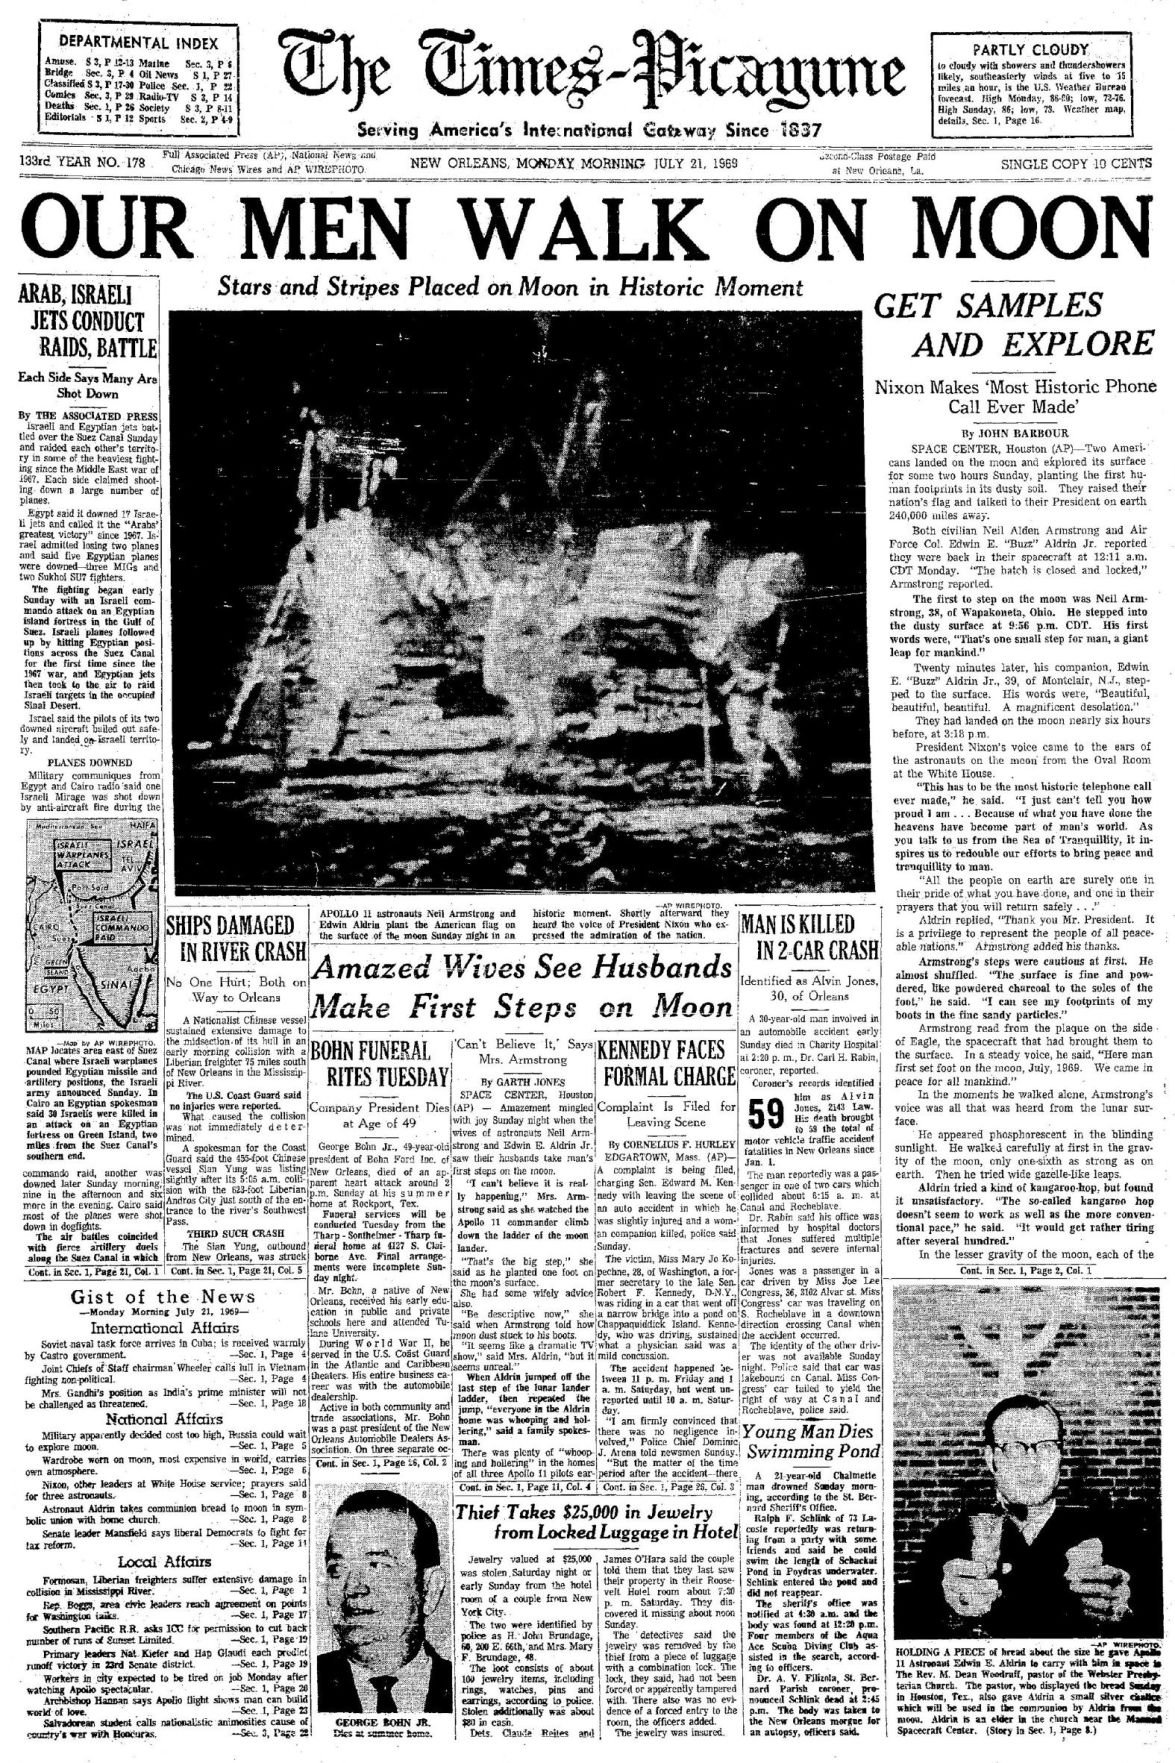 07 Times-Picayune MOON newspaper 1969.pdf